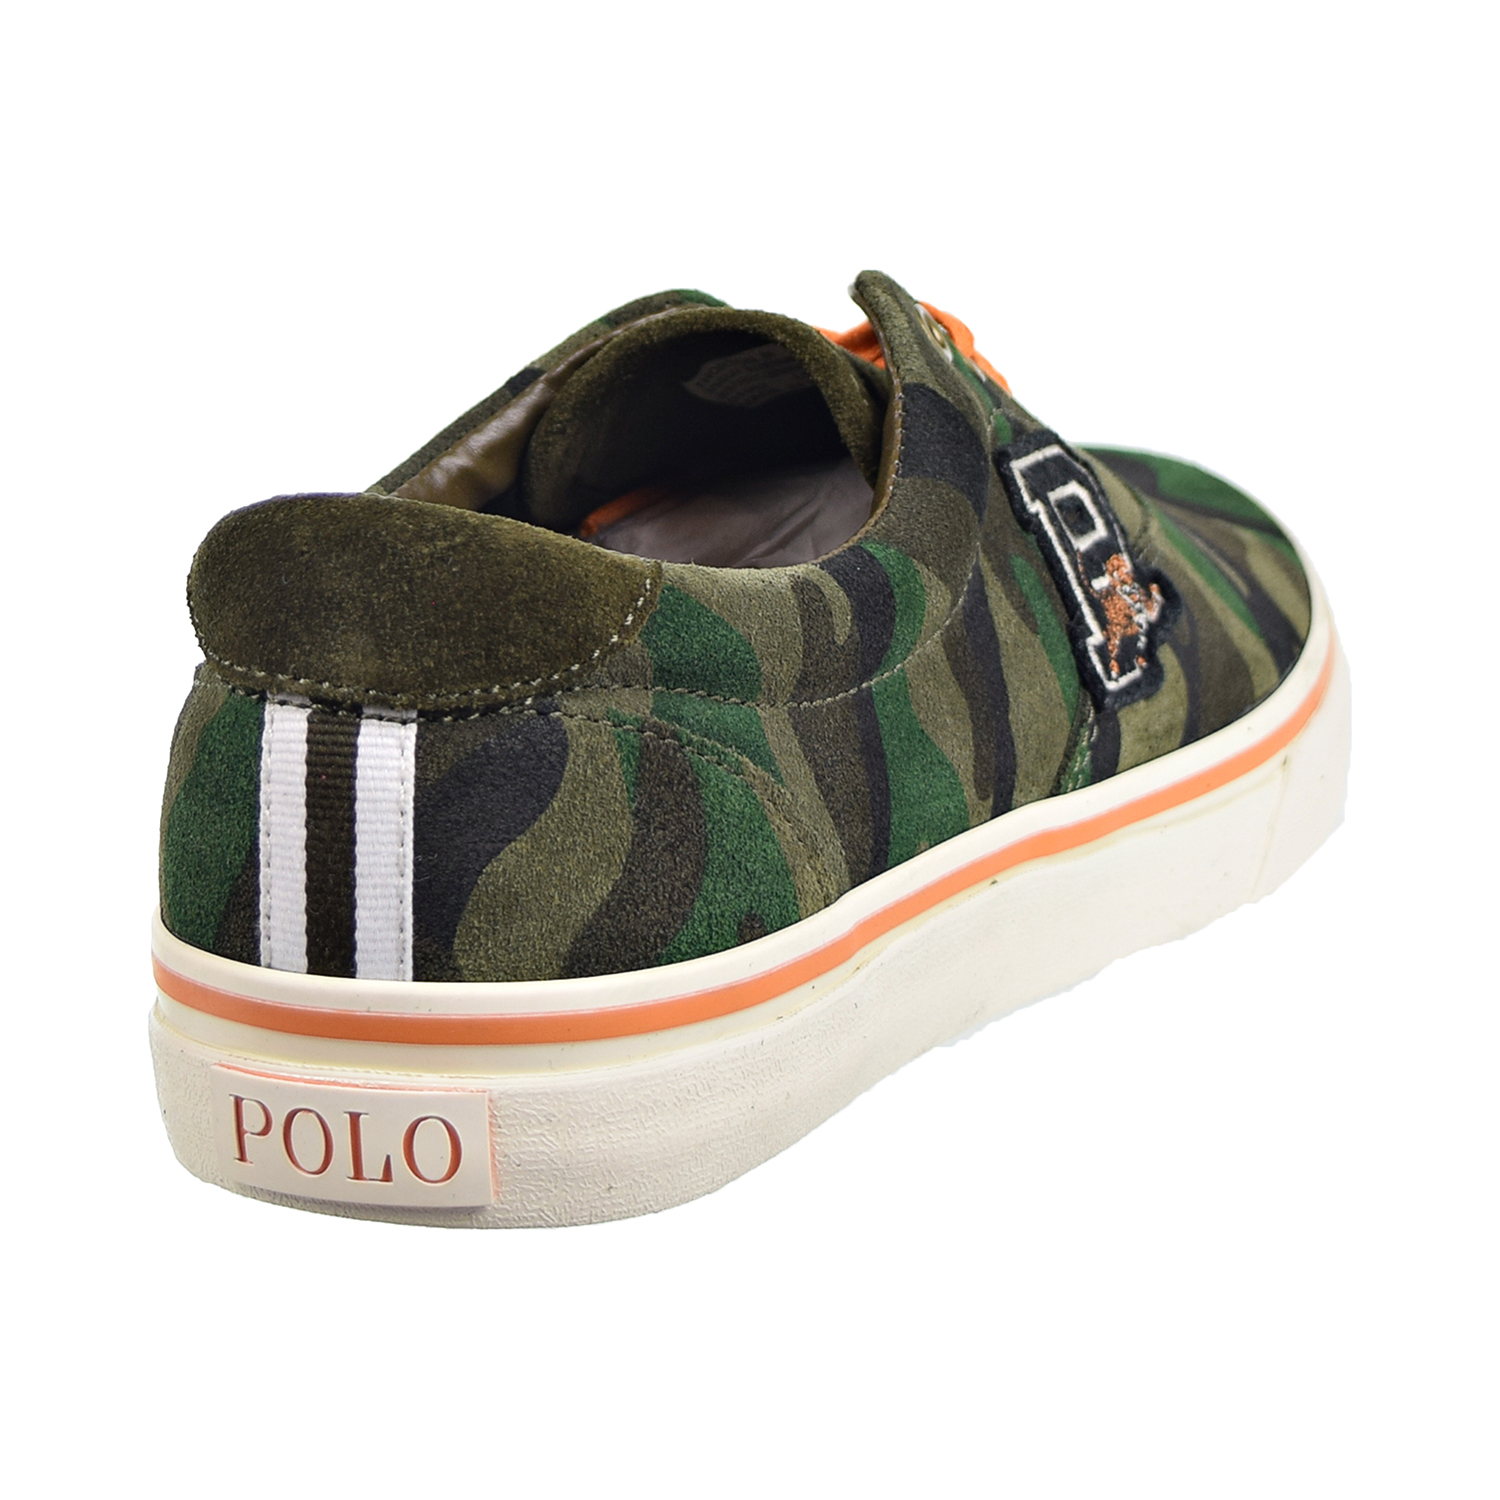 Polo Ralph Lauren Thorton III Men's Shoes Olive Camo 816745803-001 - image 3 of 6